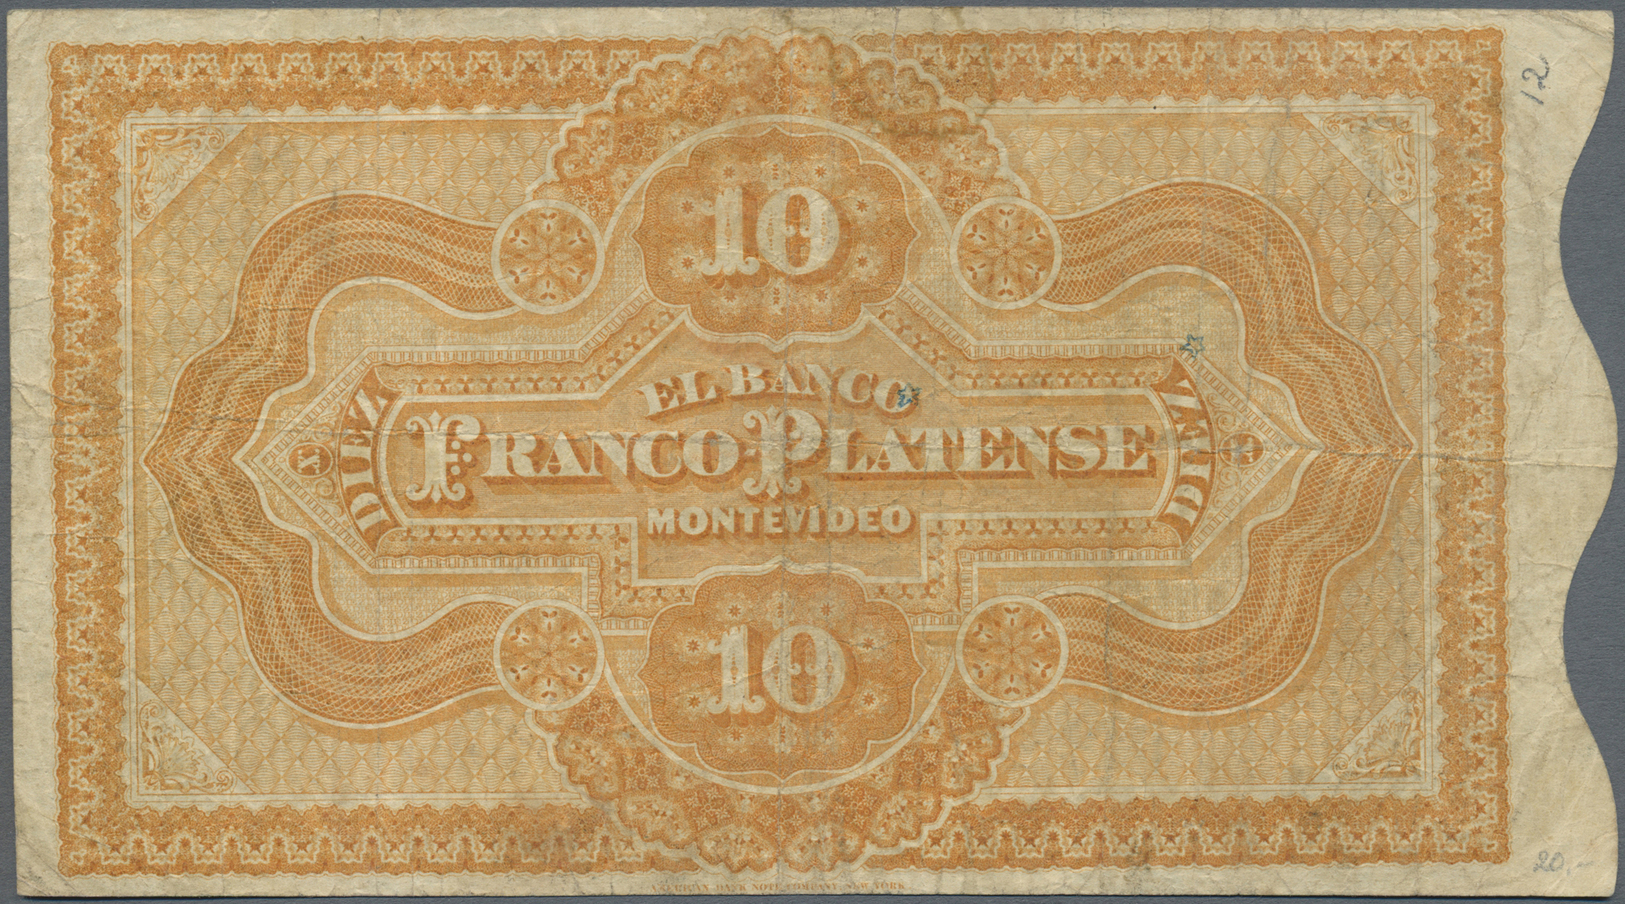 03480 Uruguay: El Banco Franco-Platense 1 Doblon = 10 Pesos 1871 P. S172, Used With Folds, No Holes, One 1cm Tear At Upp - Uruguay